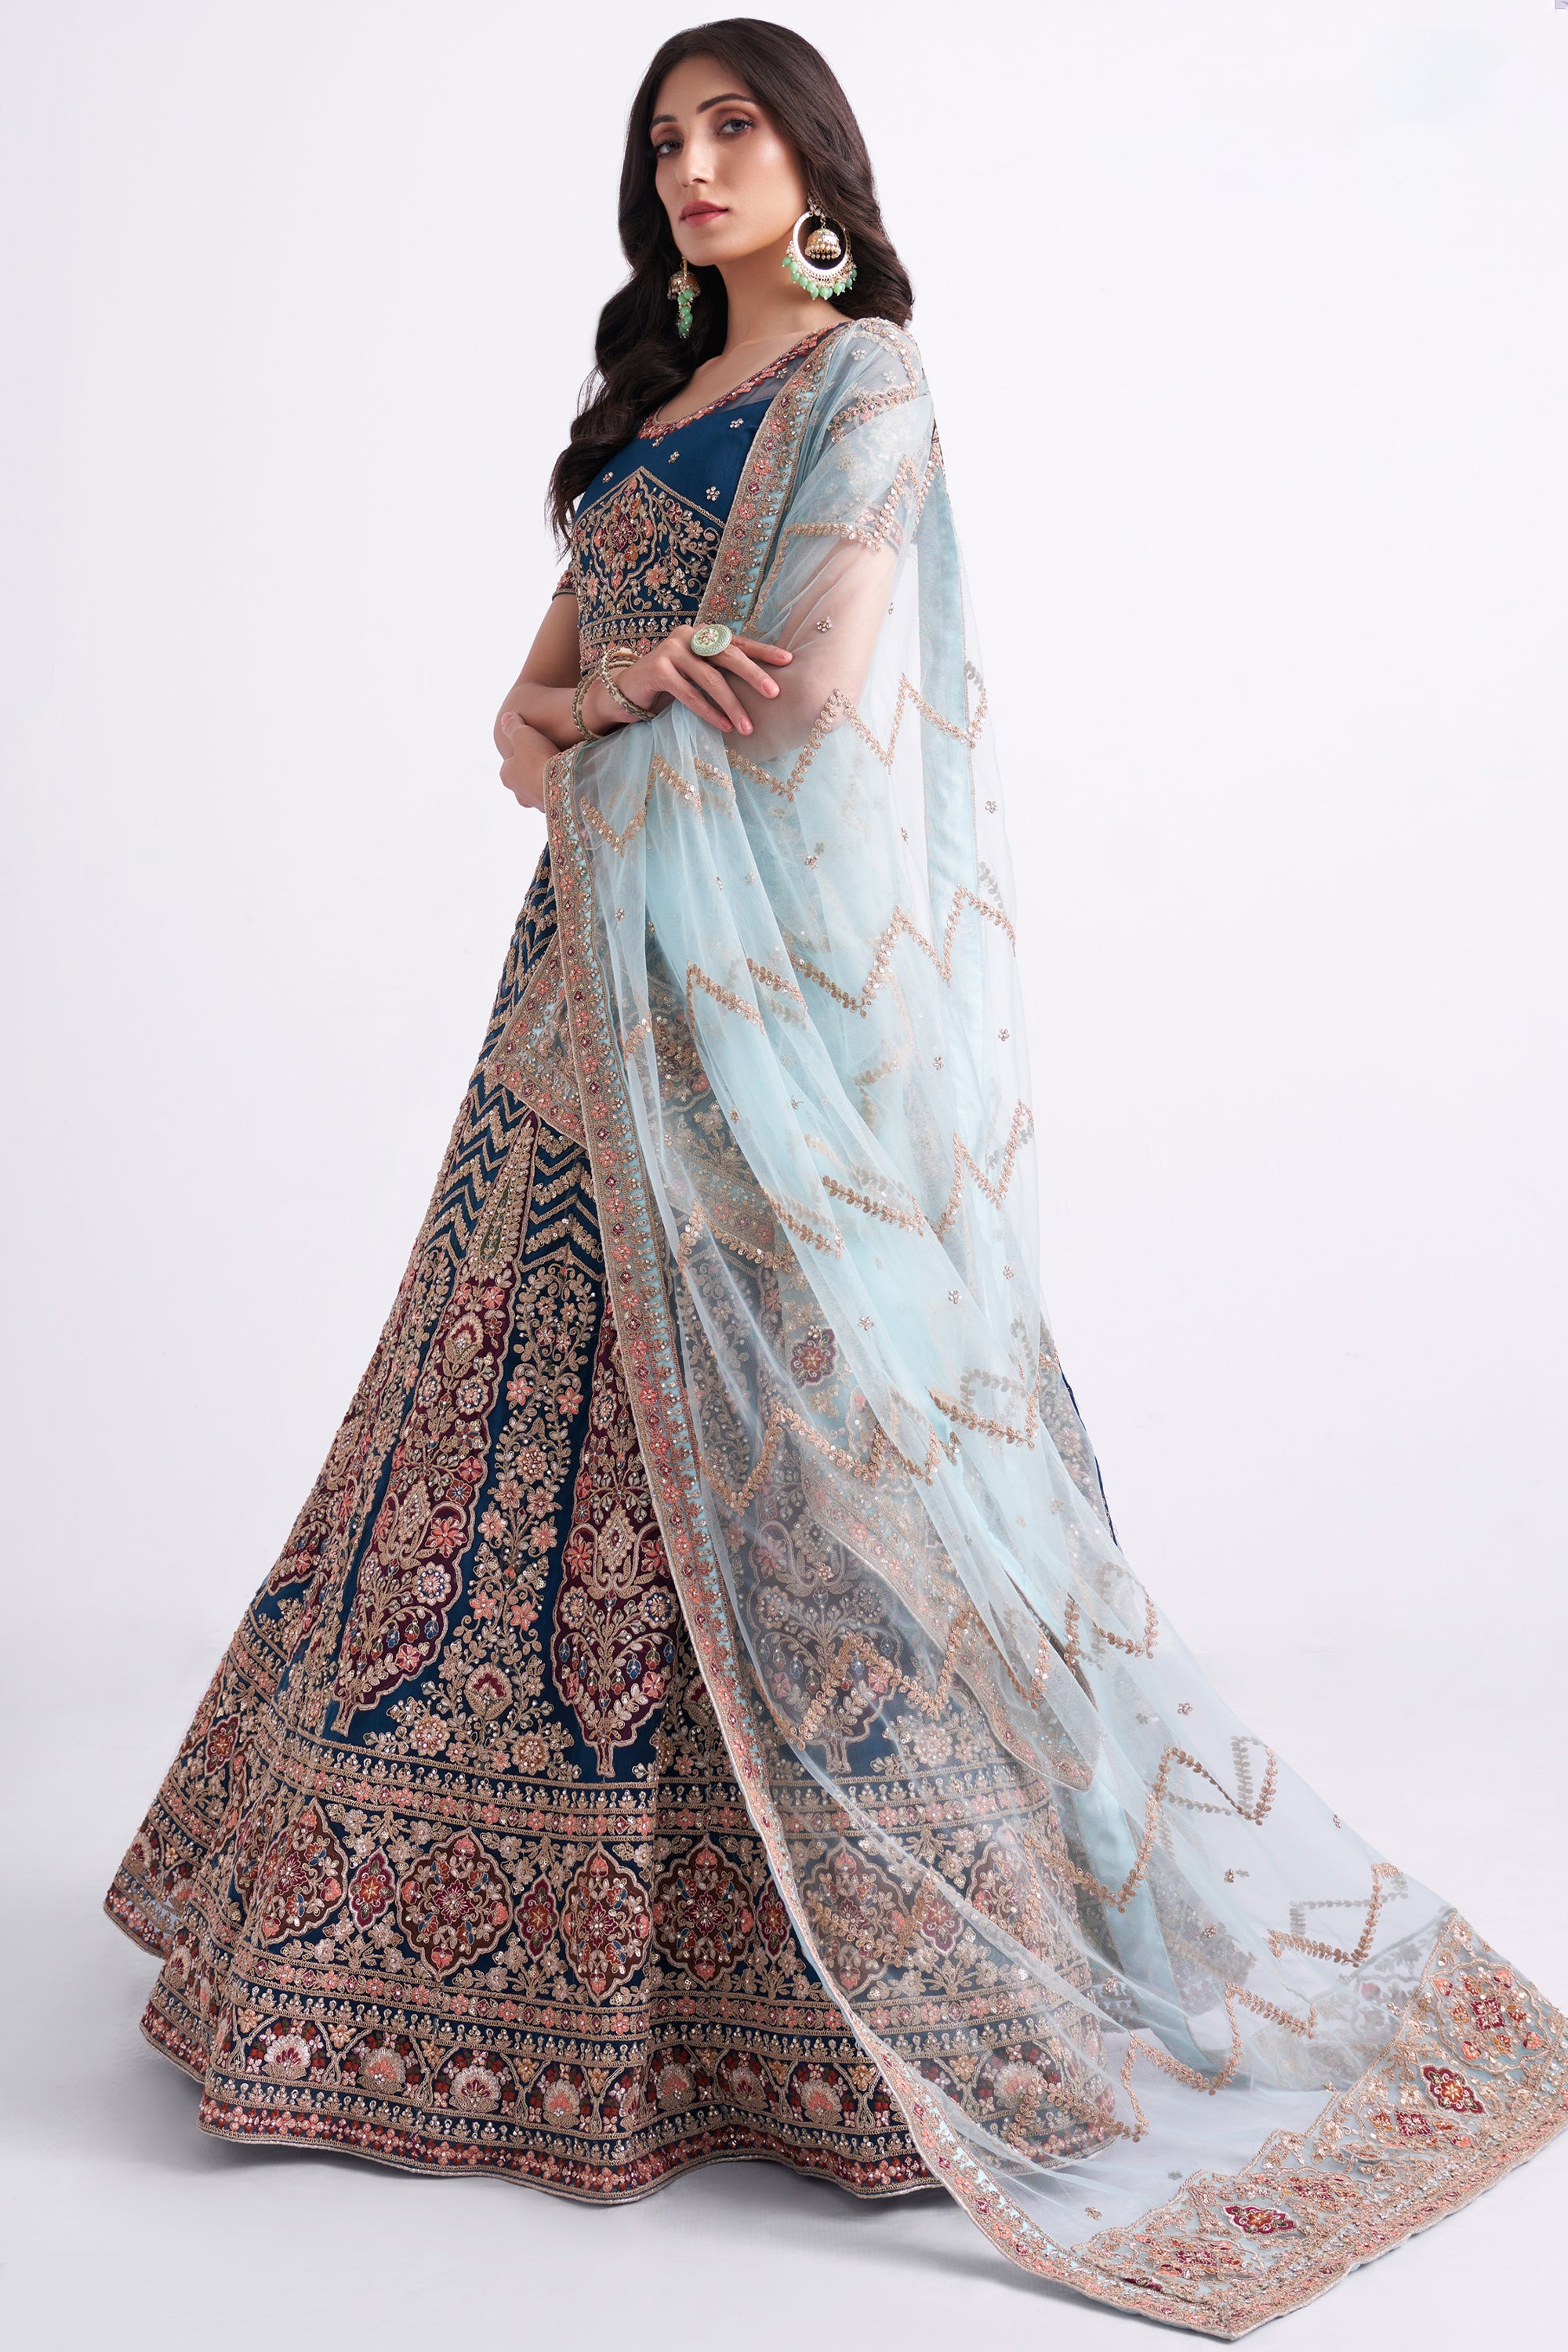 Women's Bridal Heritage Persian Blue Heavy Embroidered Net Designer Lehenga - CHITRAS